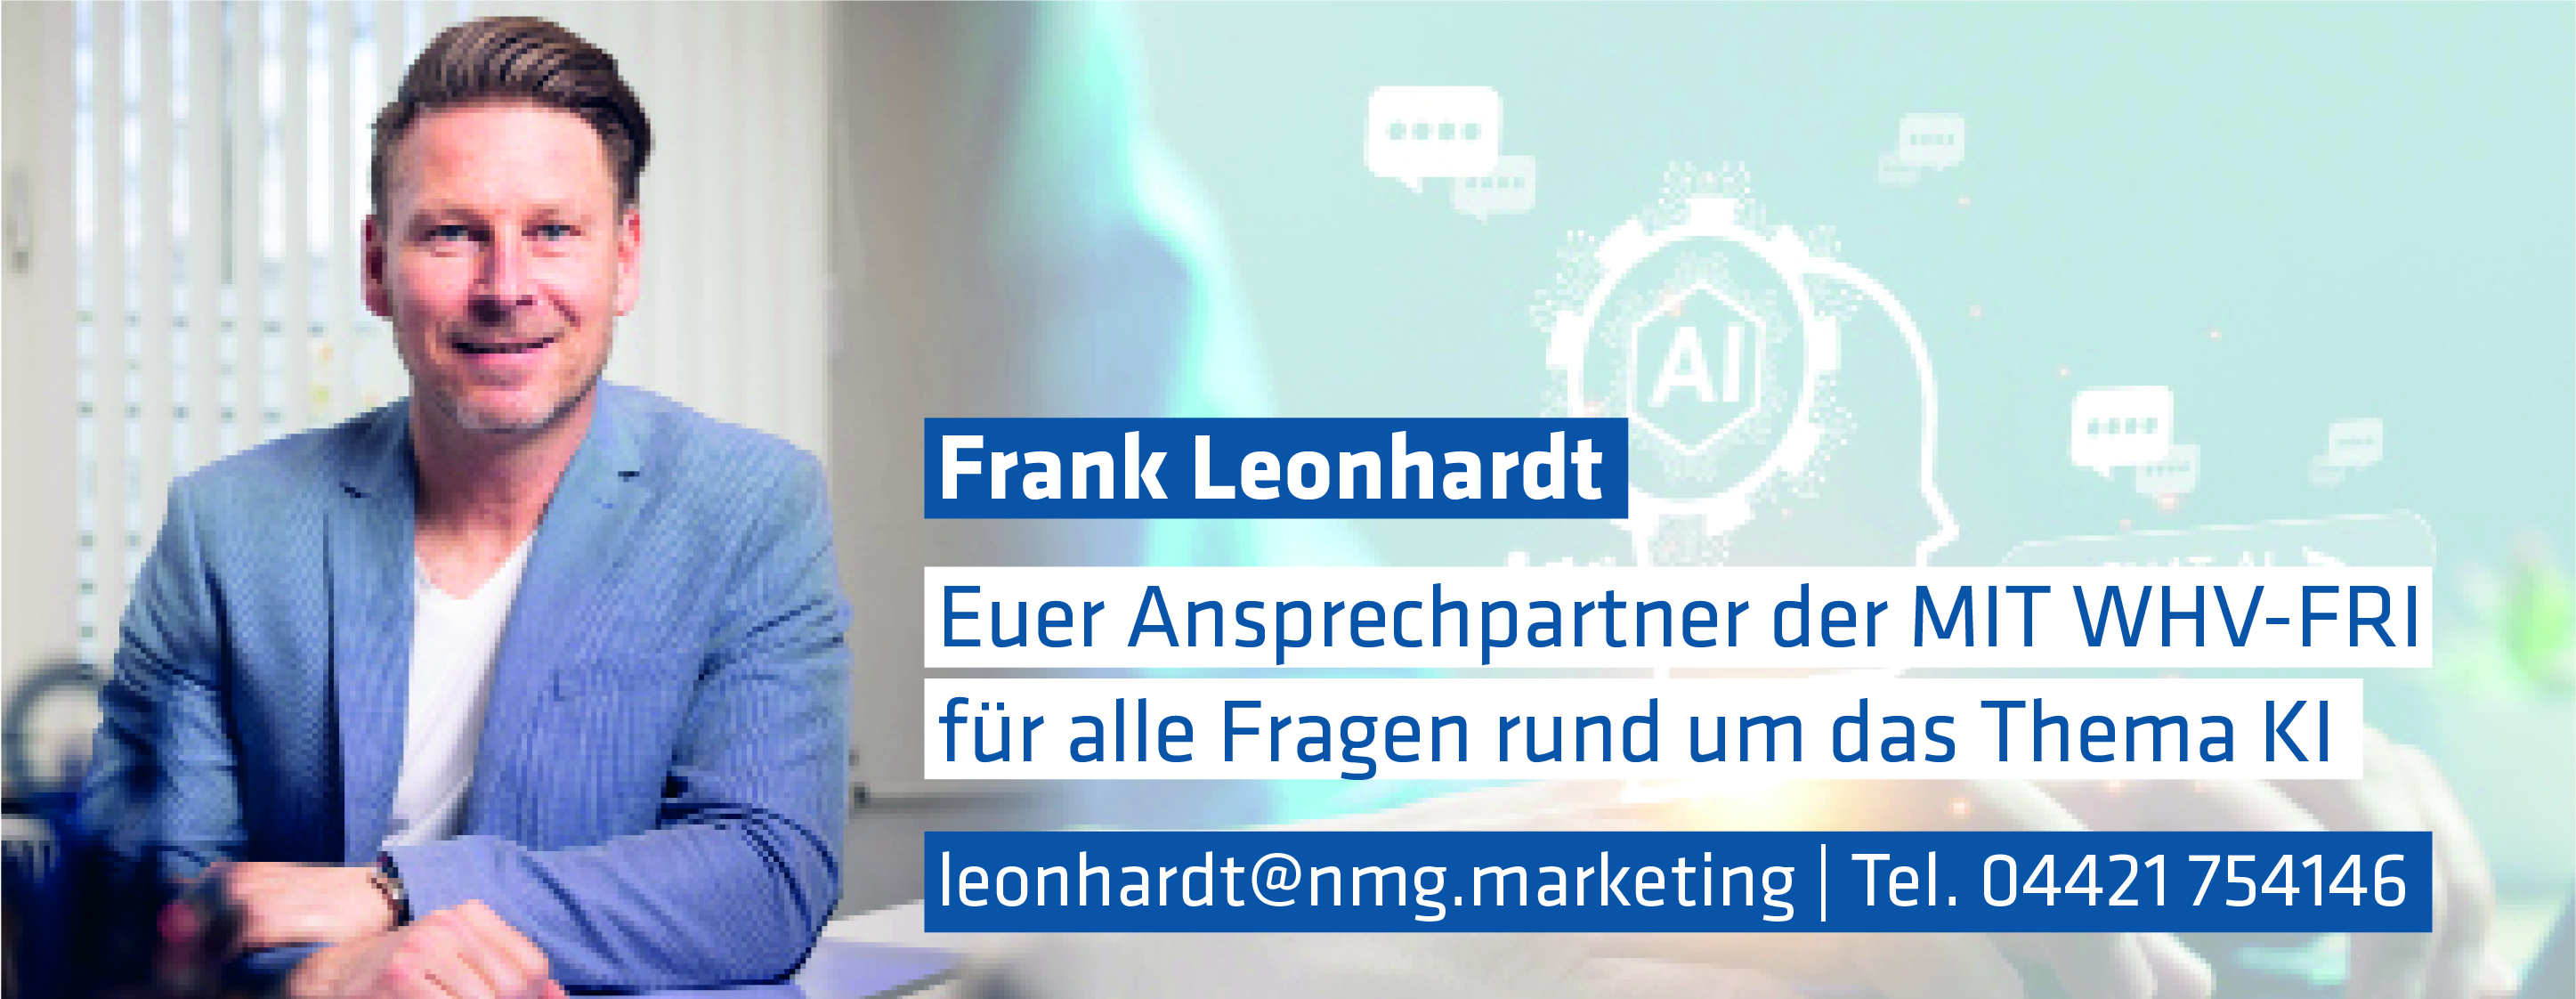 Frank Leonhardt - Ansprechpartner rund um Thema KI